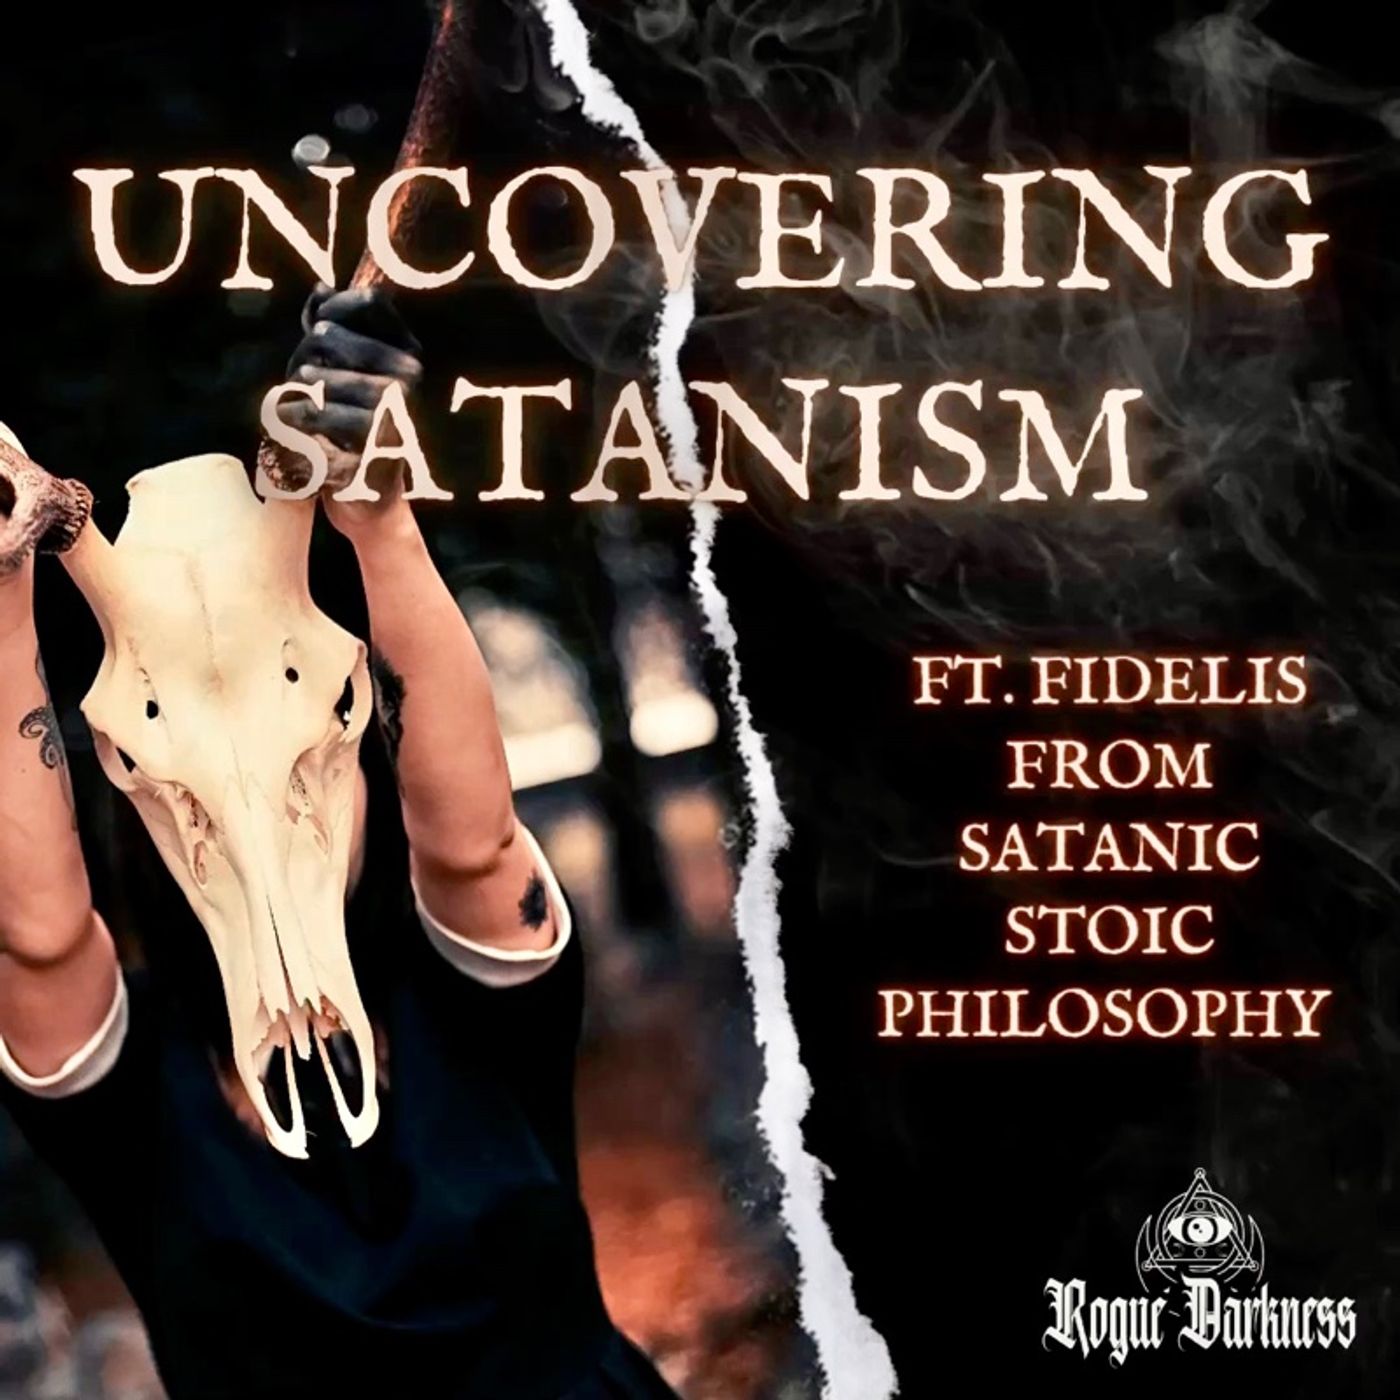 XXXVIII: Uncovering Satanism ft. Fidelis from Satanic Stoic Philosophy